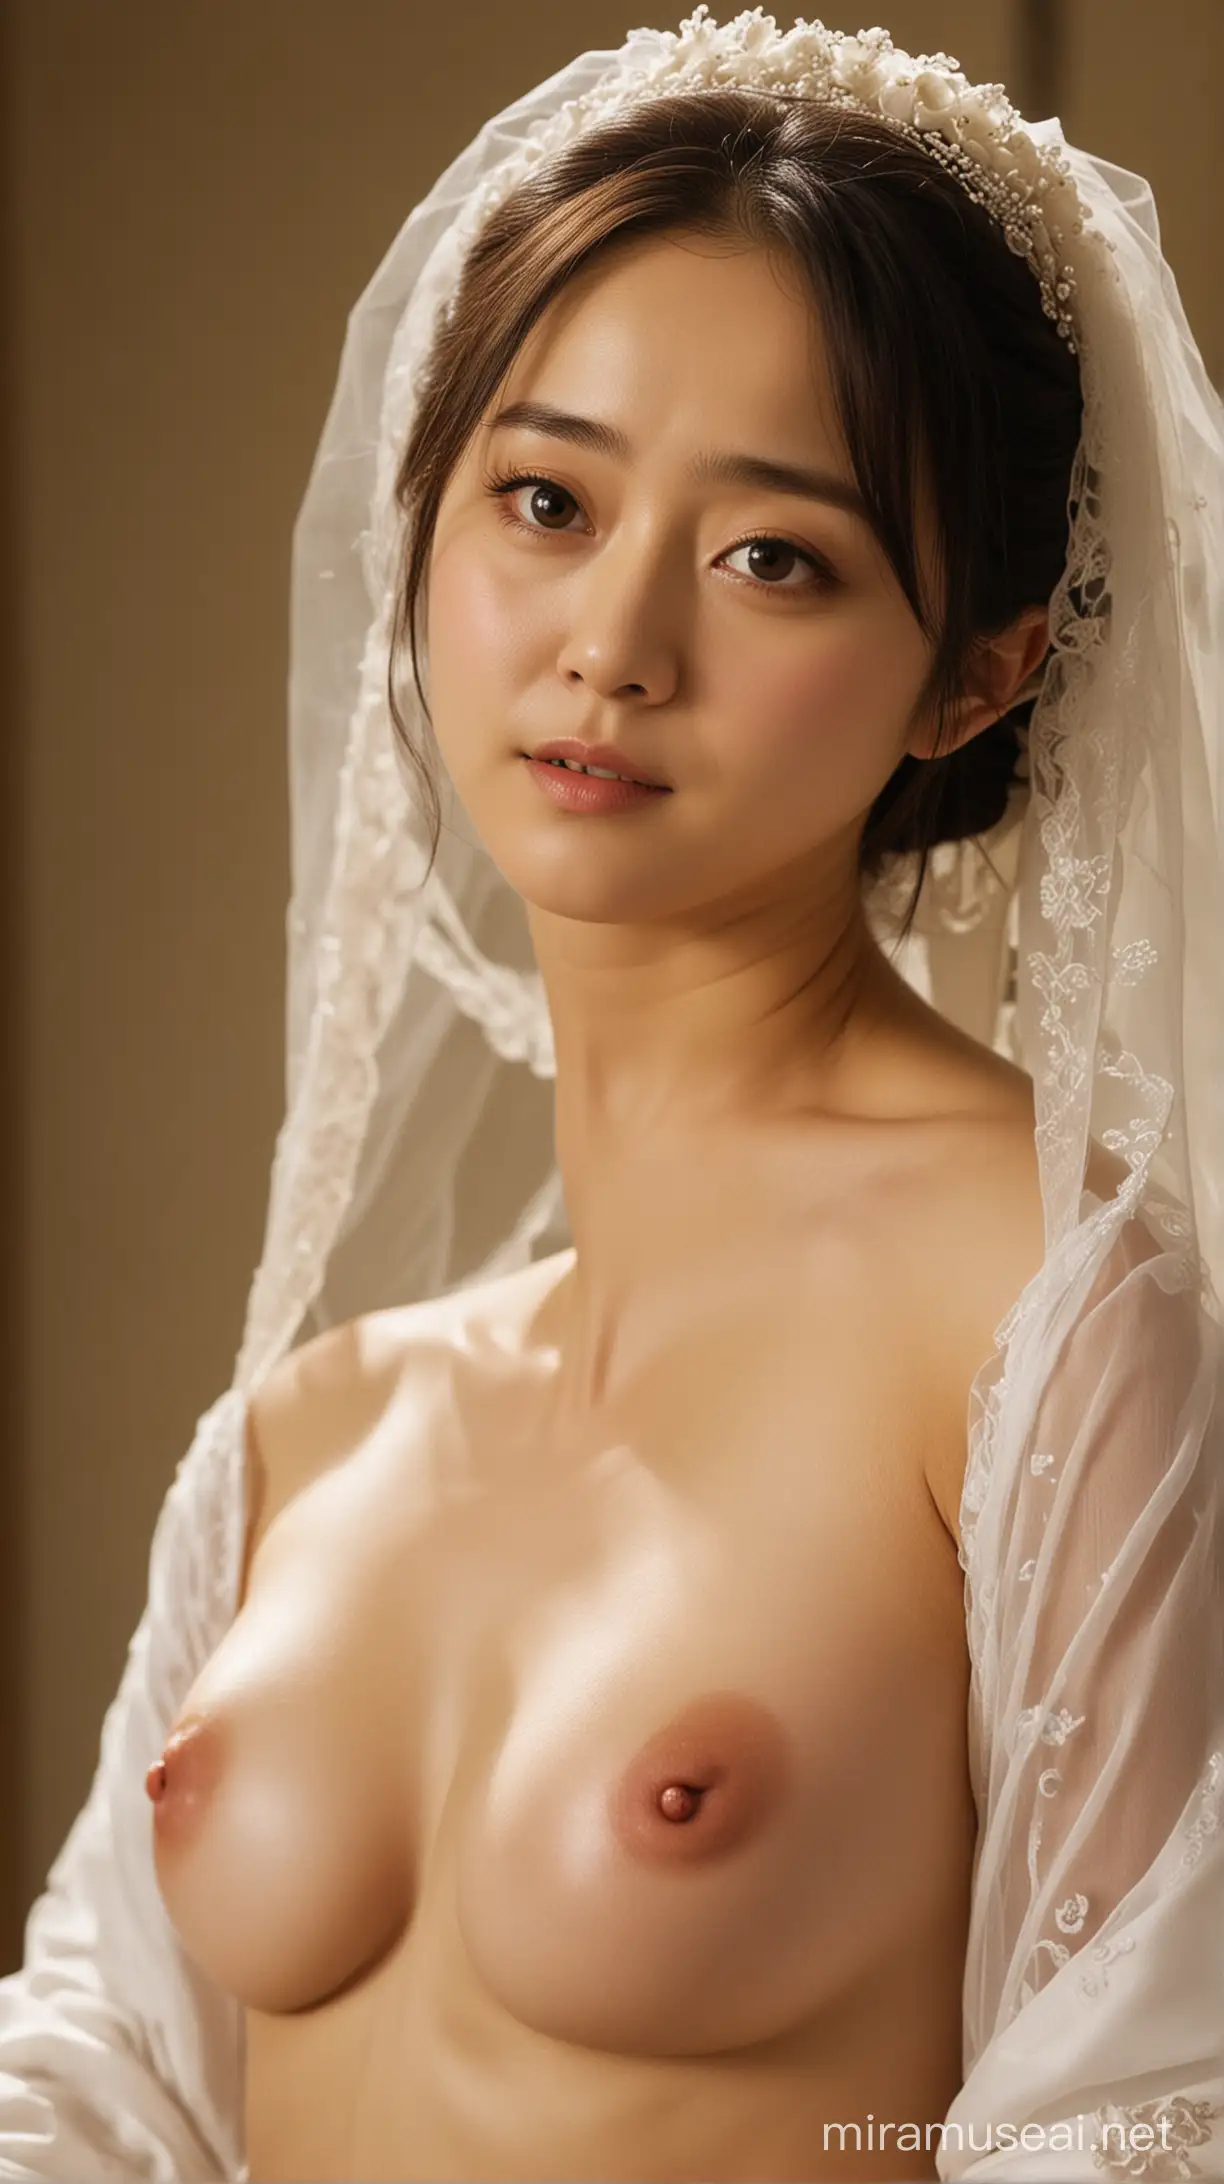 Moon Geun-young sebagai Seo Bo Eun di film My Little Bride telanjang bulat. Persis.